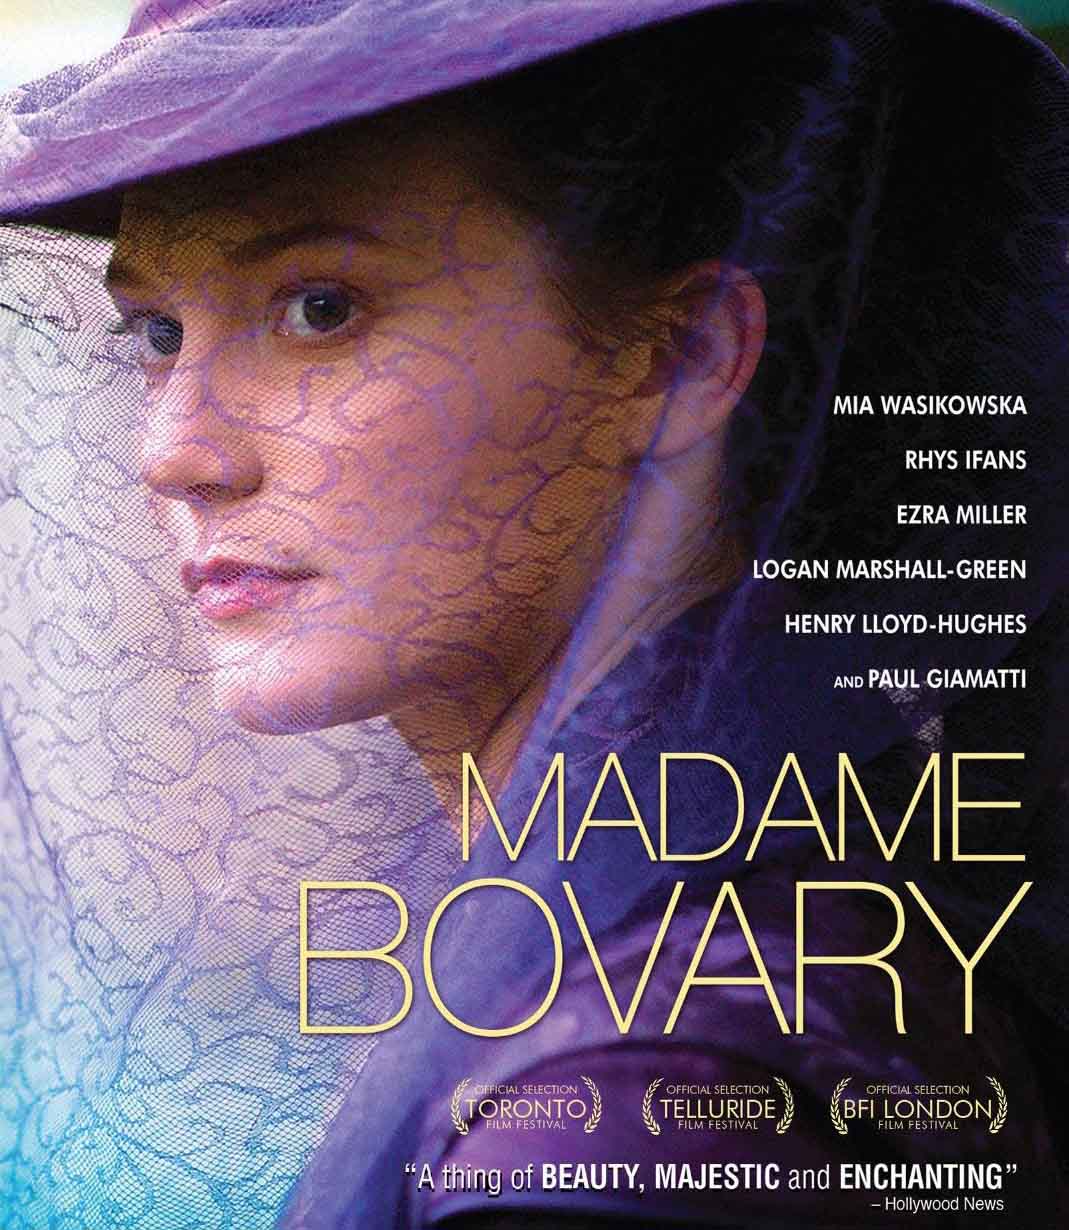 Madame bovary téléchargement film torrent